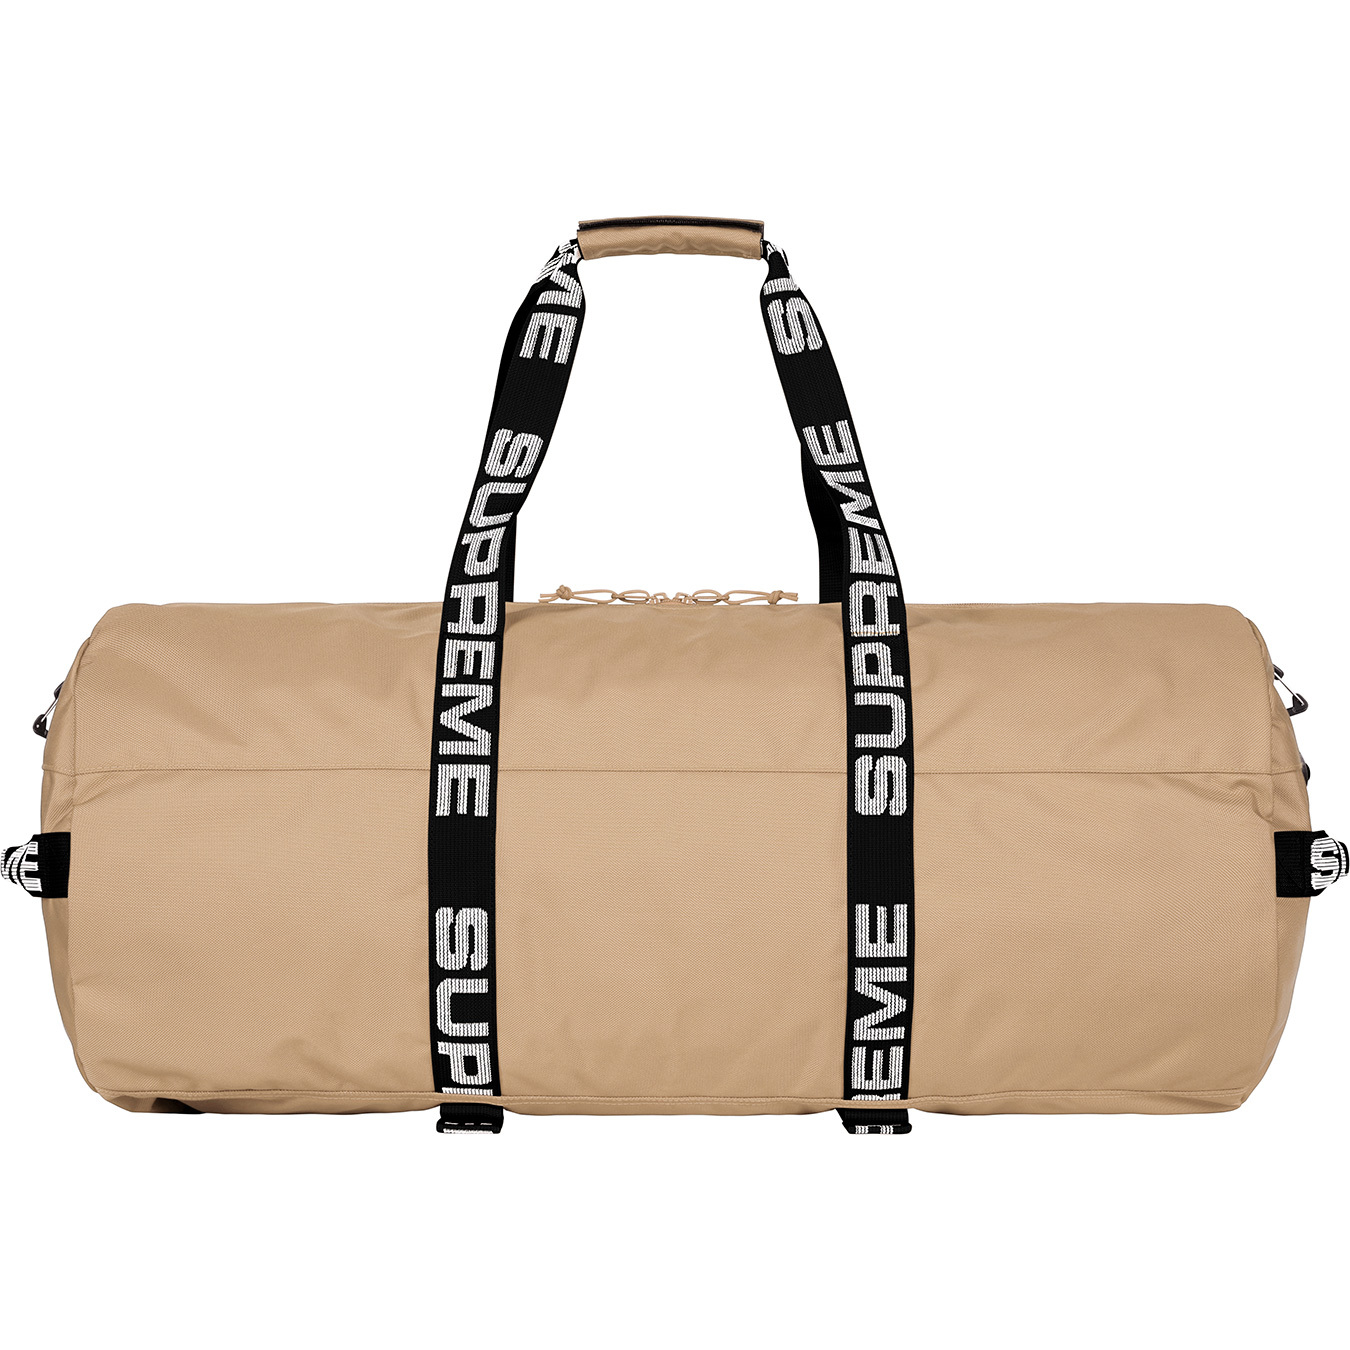 S/S 2018 Supreme cordura fabric duffle bag